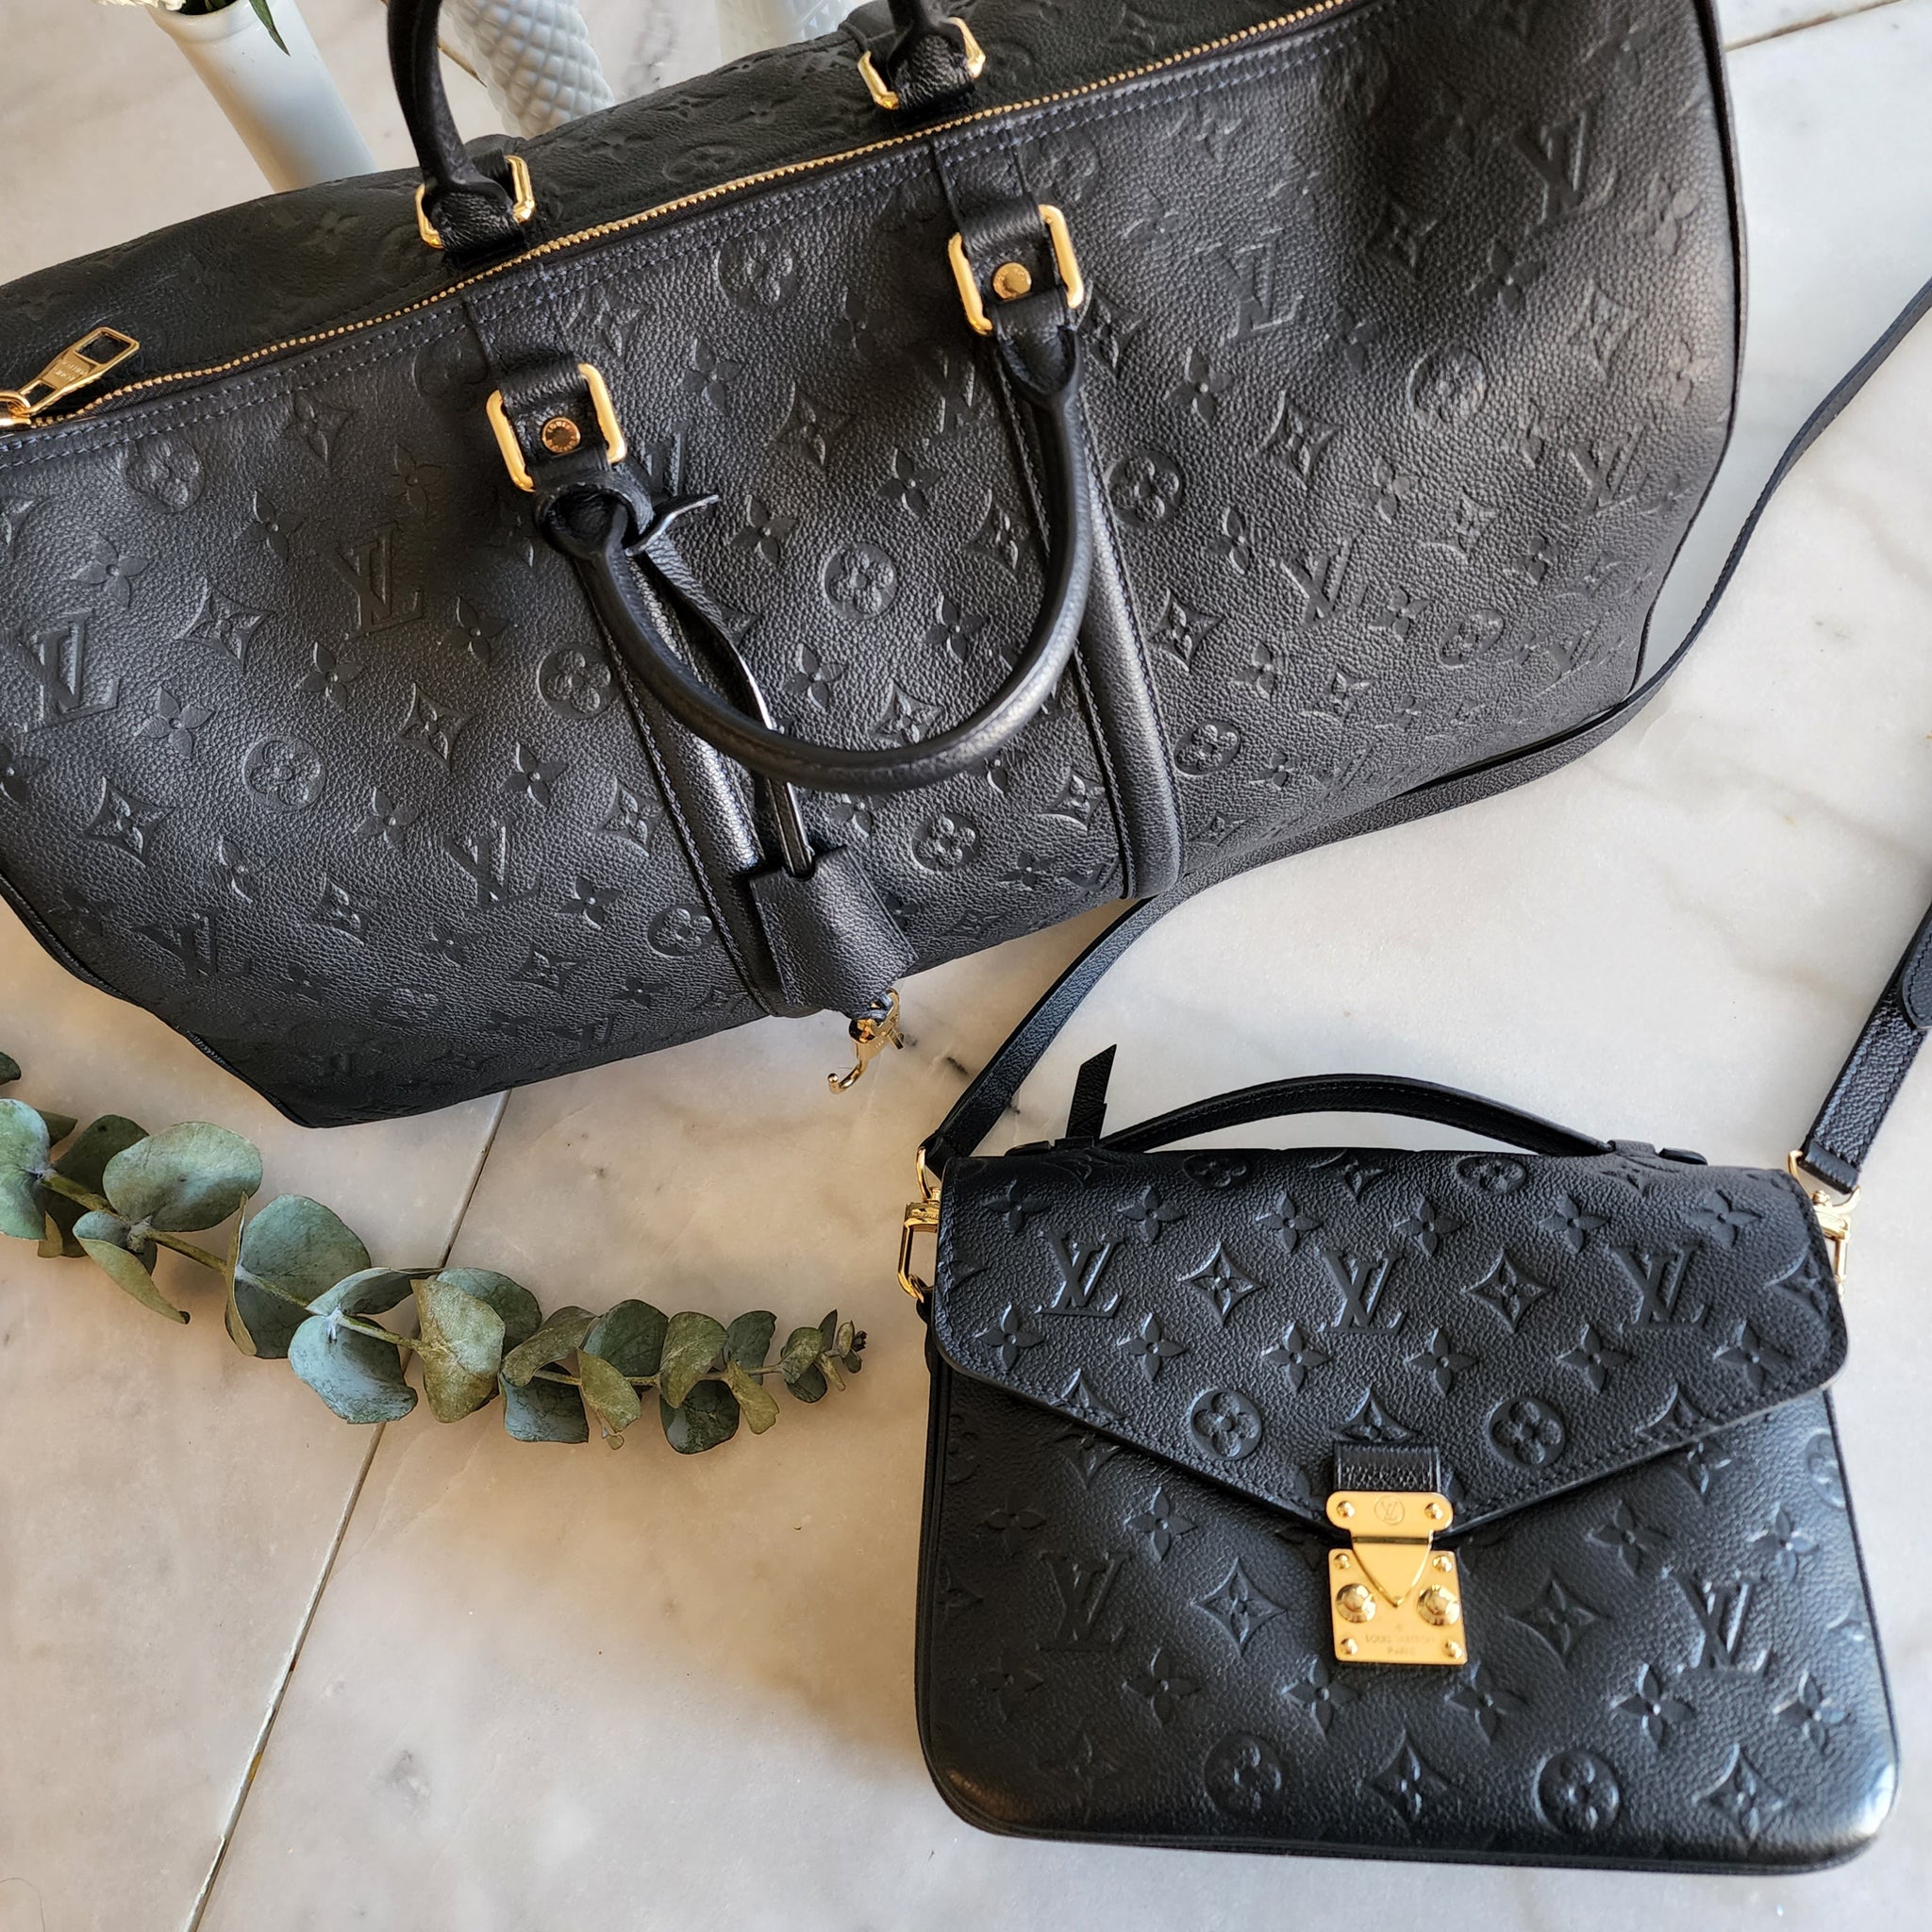 Louis Vuitton Keepall 45 Travel Bag in Black Empreinte Monogram